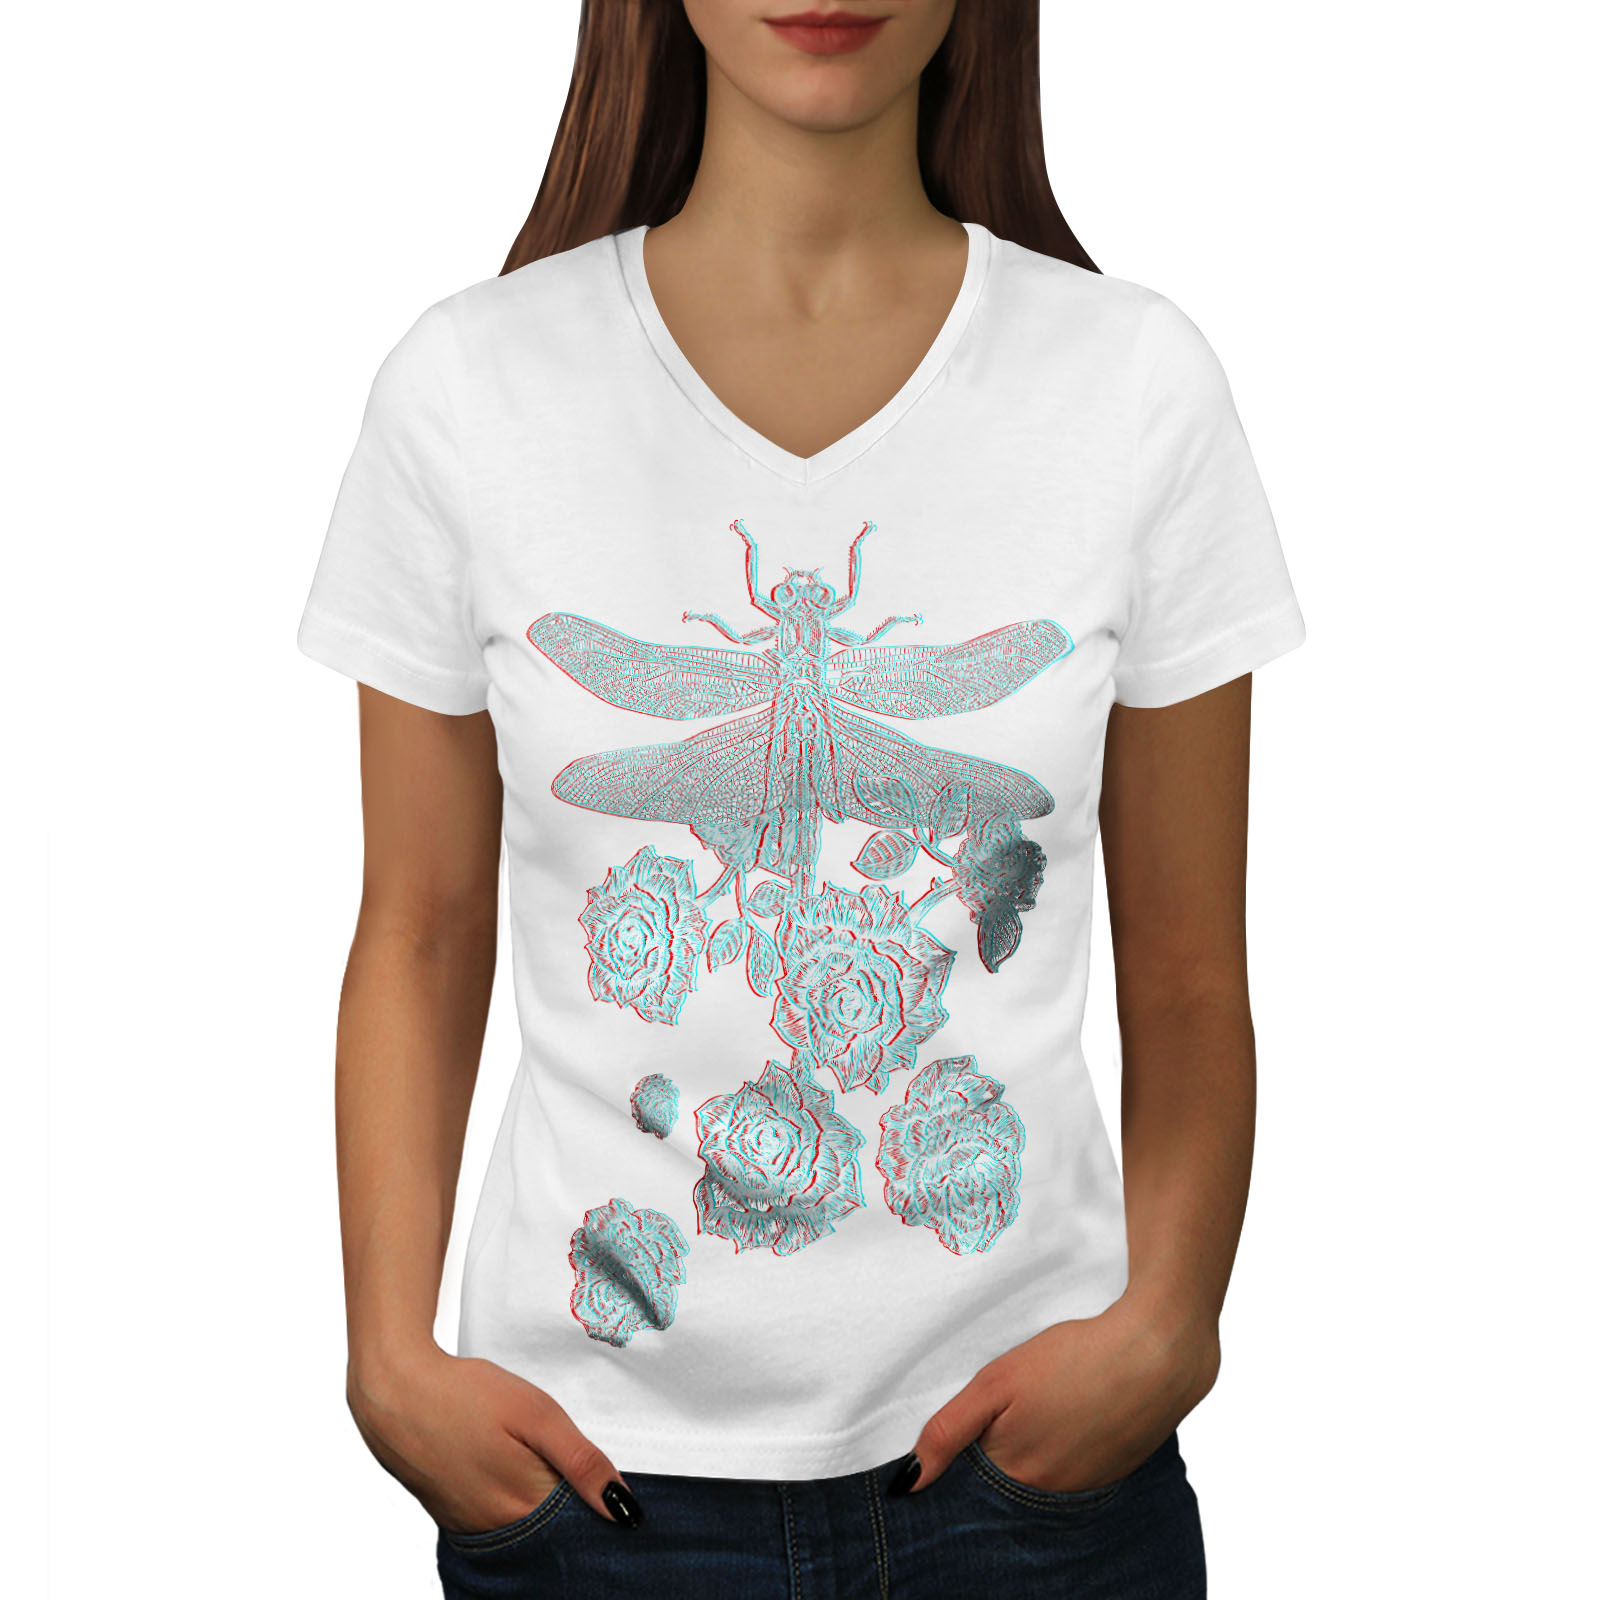 Wellcoda Seahorse Flowers Animal Womens V-Neck T-shirt Graphic Design Tee 